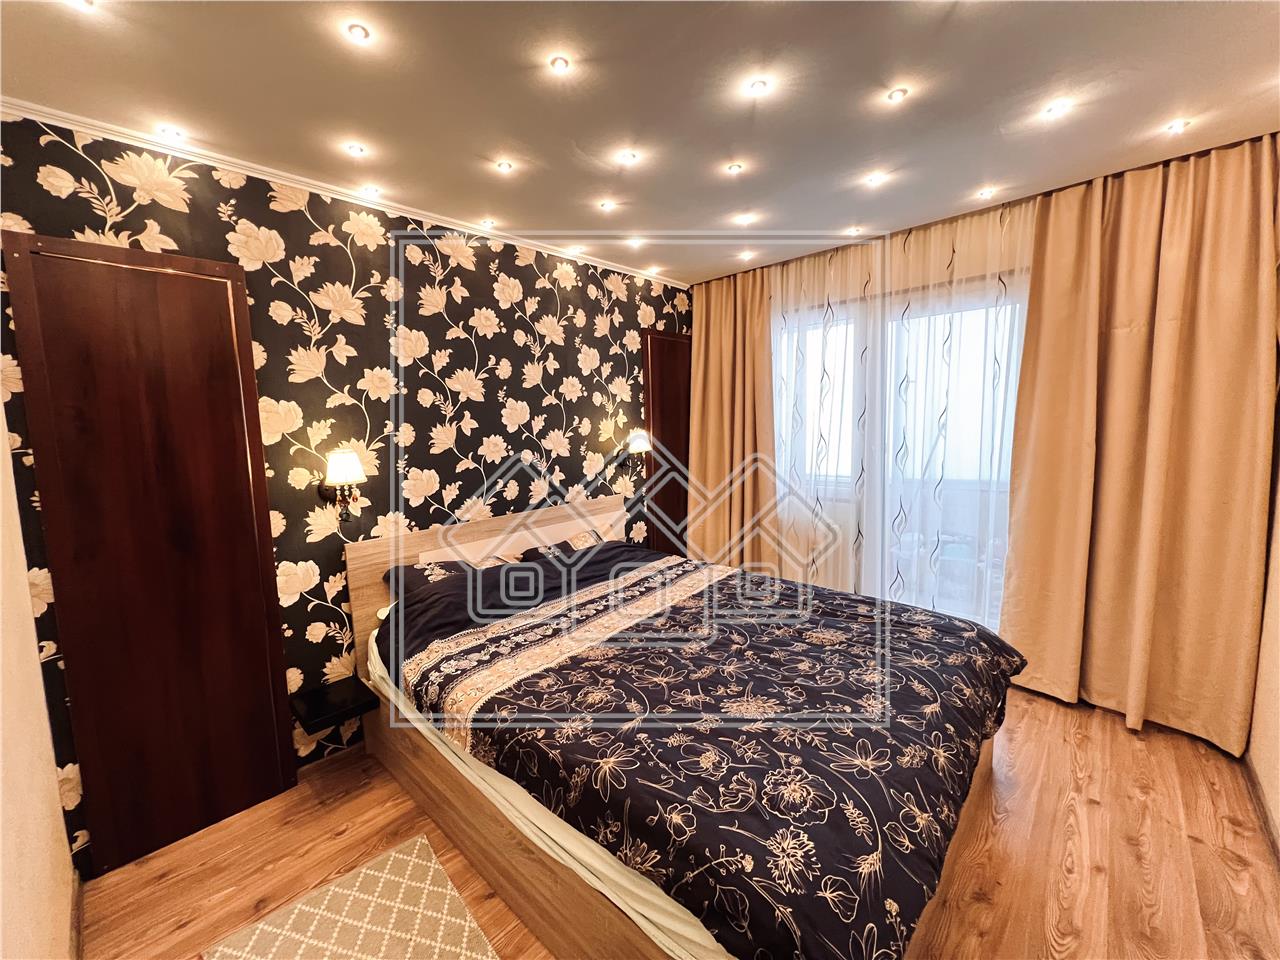 Apartament de vanzare in Sibiu - 2 camere si 2 balcoane - Valea Aurie